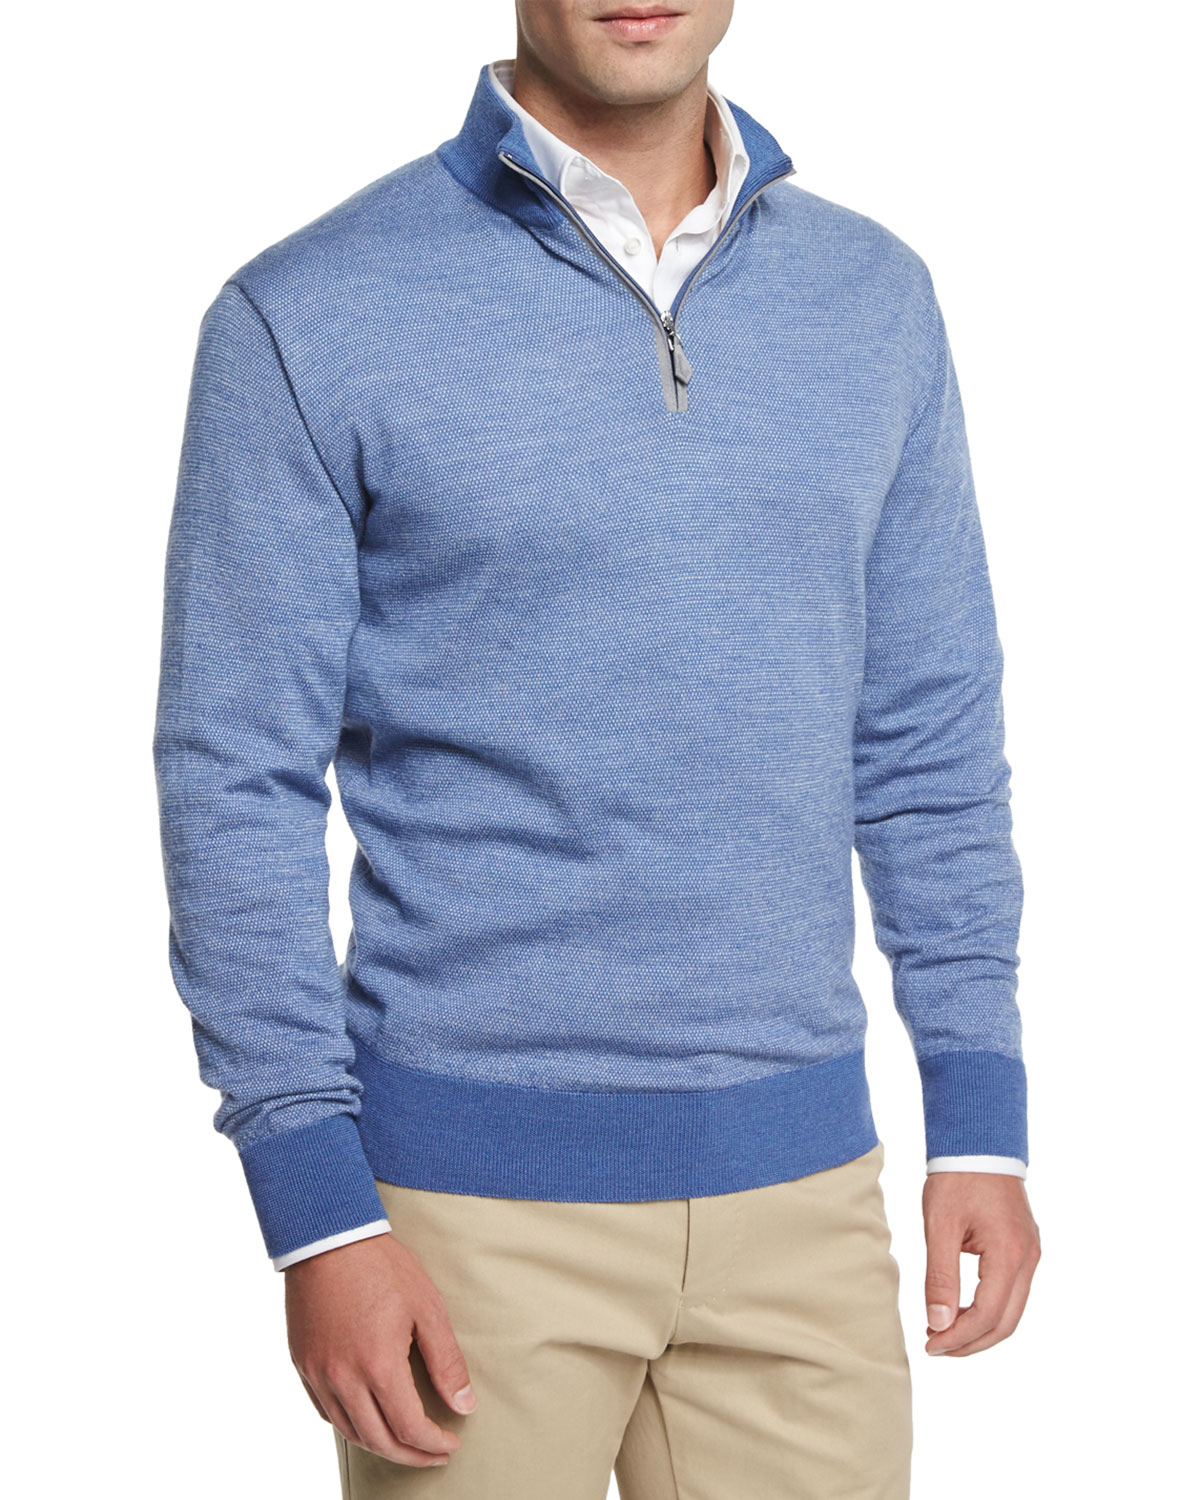 Peter Millar Cashmere Quarter-zip Pullover Sweater in Blue for Men - Lyst